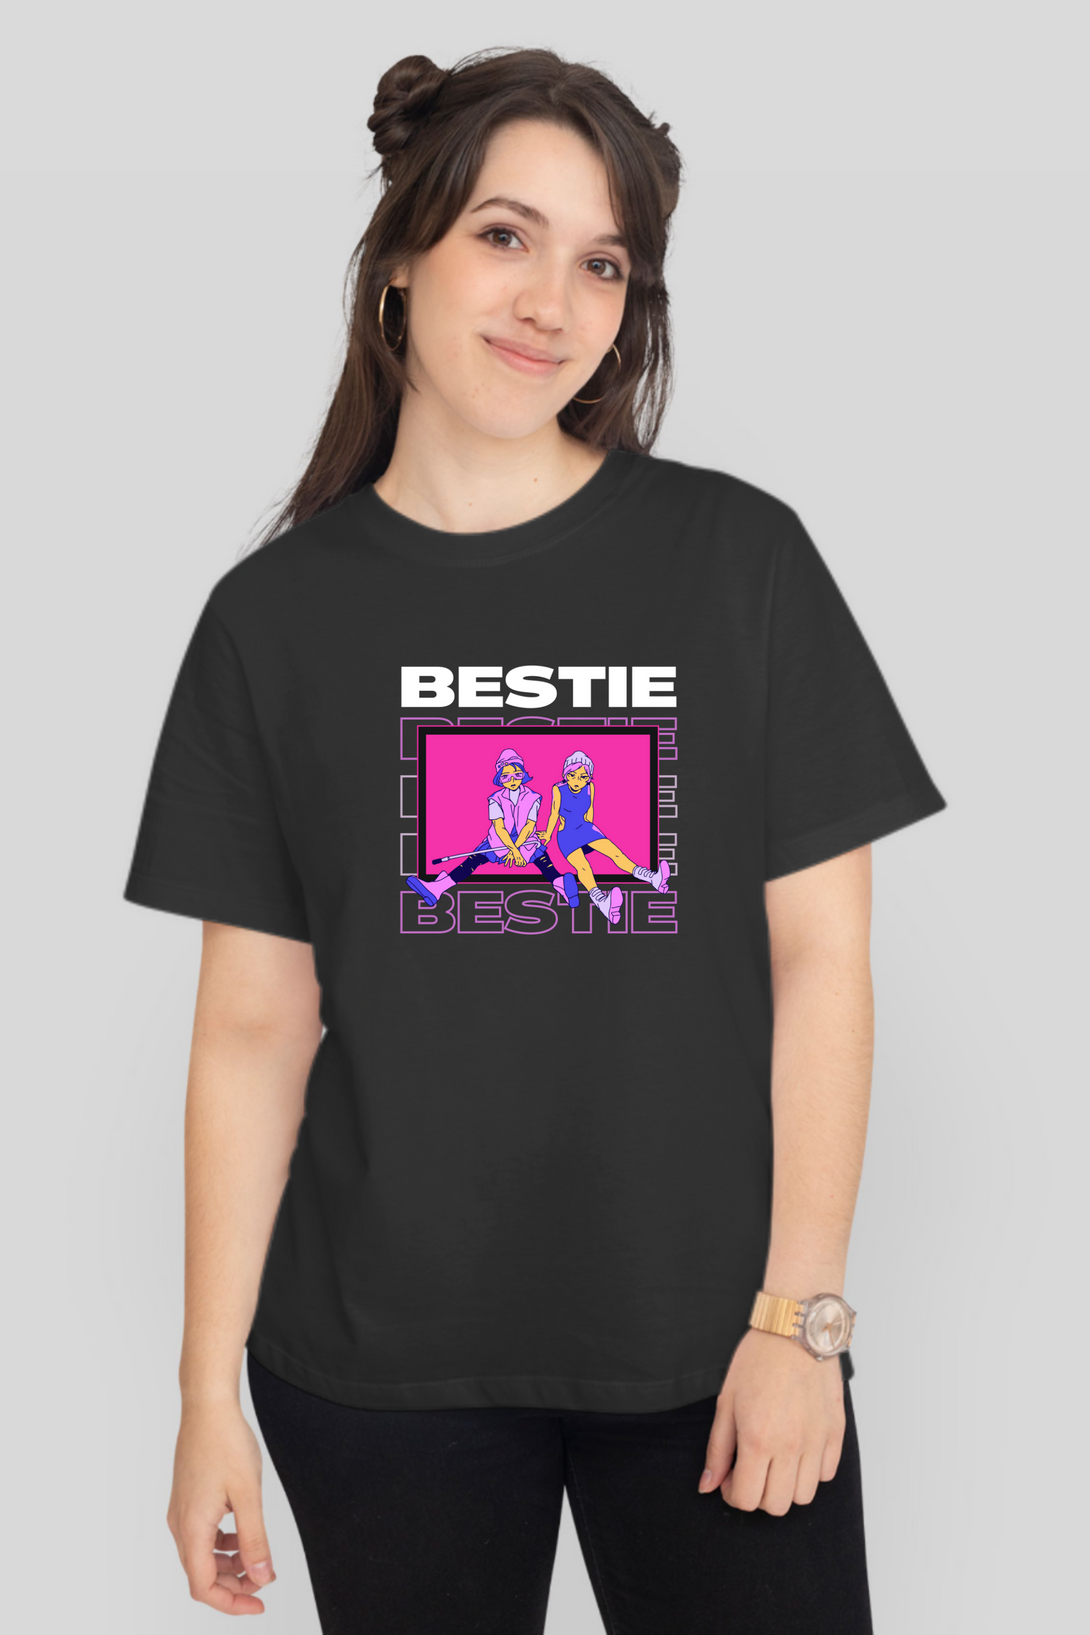 Bestie Bliss Printed T-Shirt For Women - WowWaves - 6